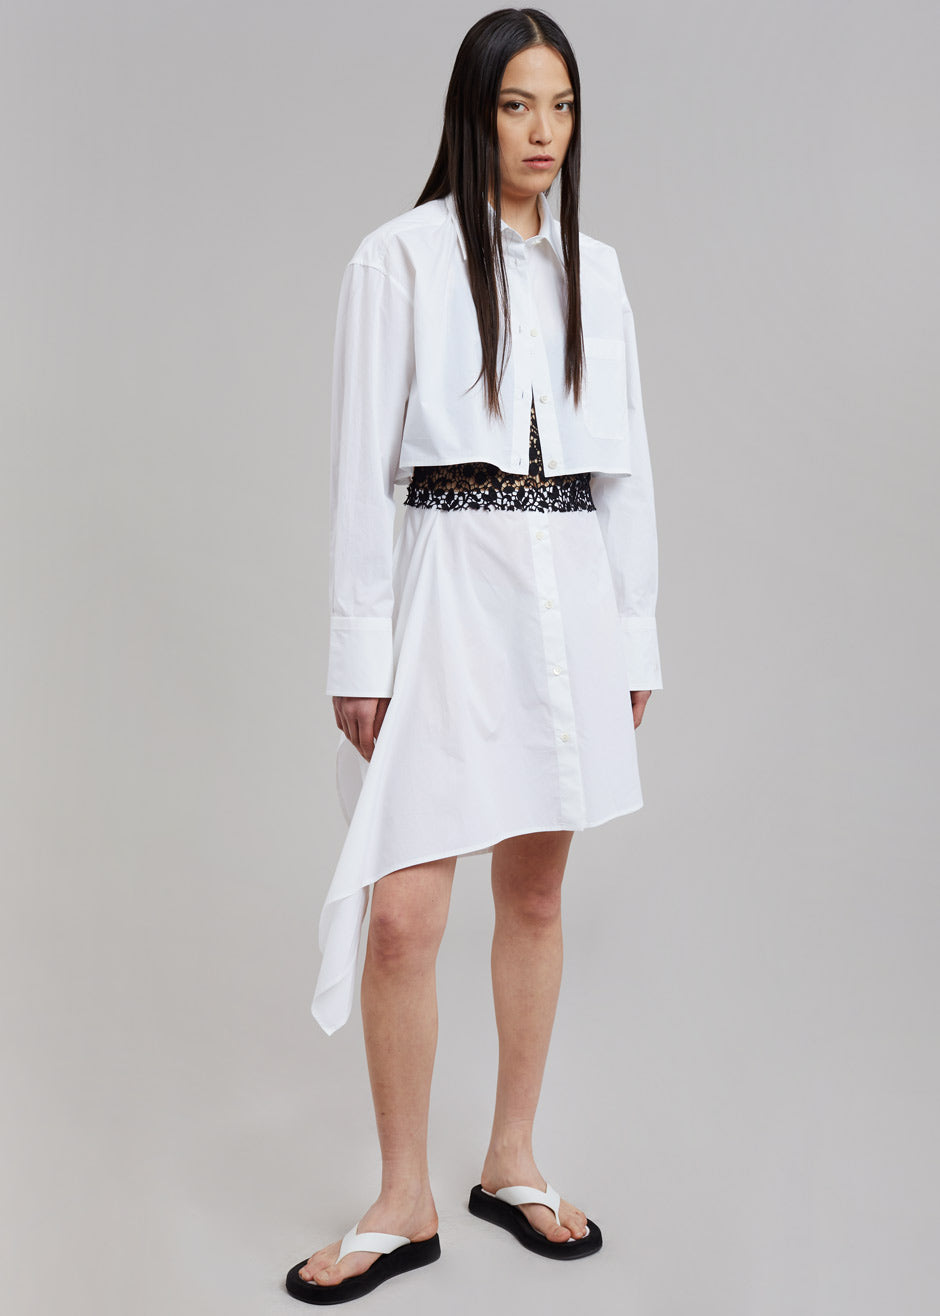 JW Anderson Lace Insert Shirt Dress - White/Black - 2